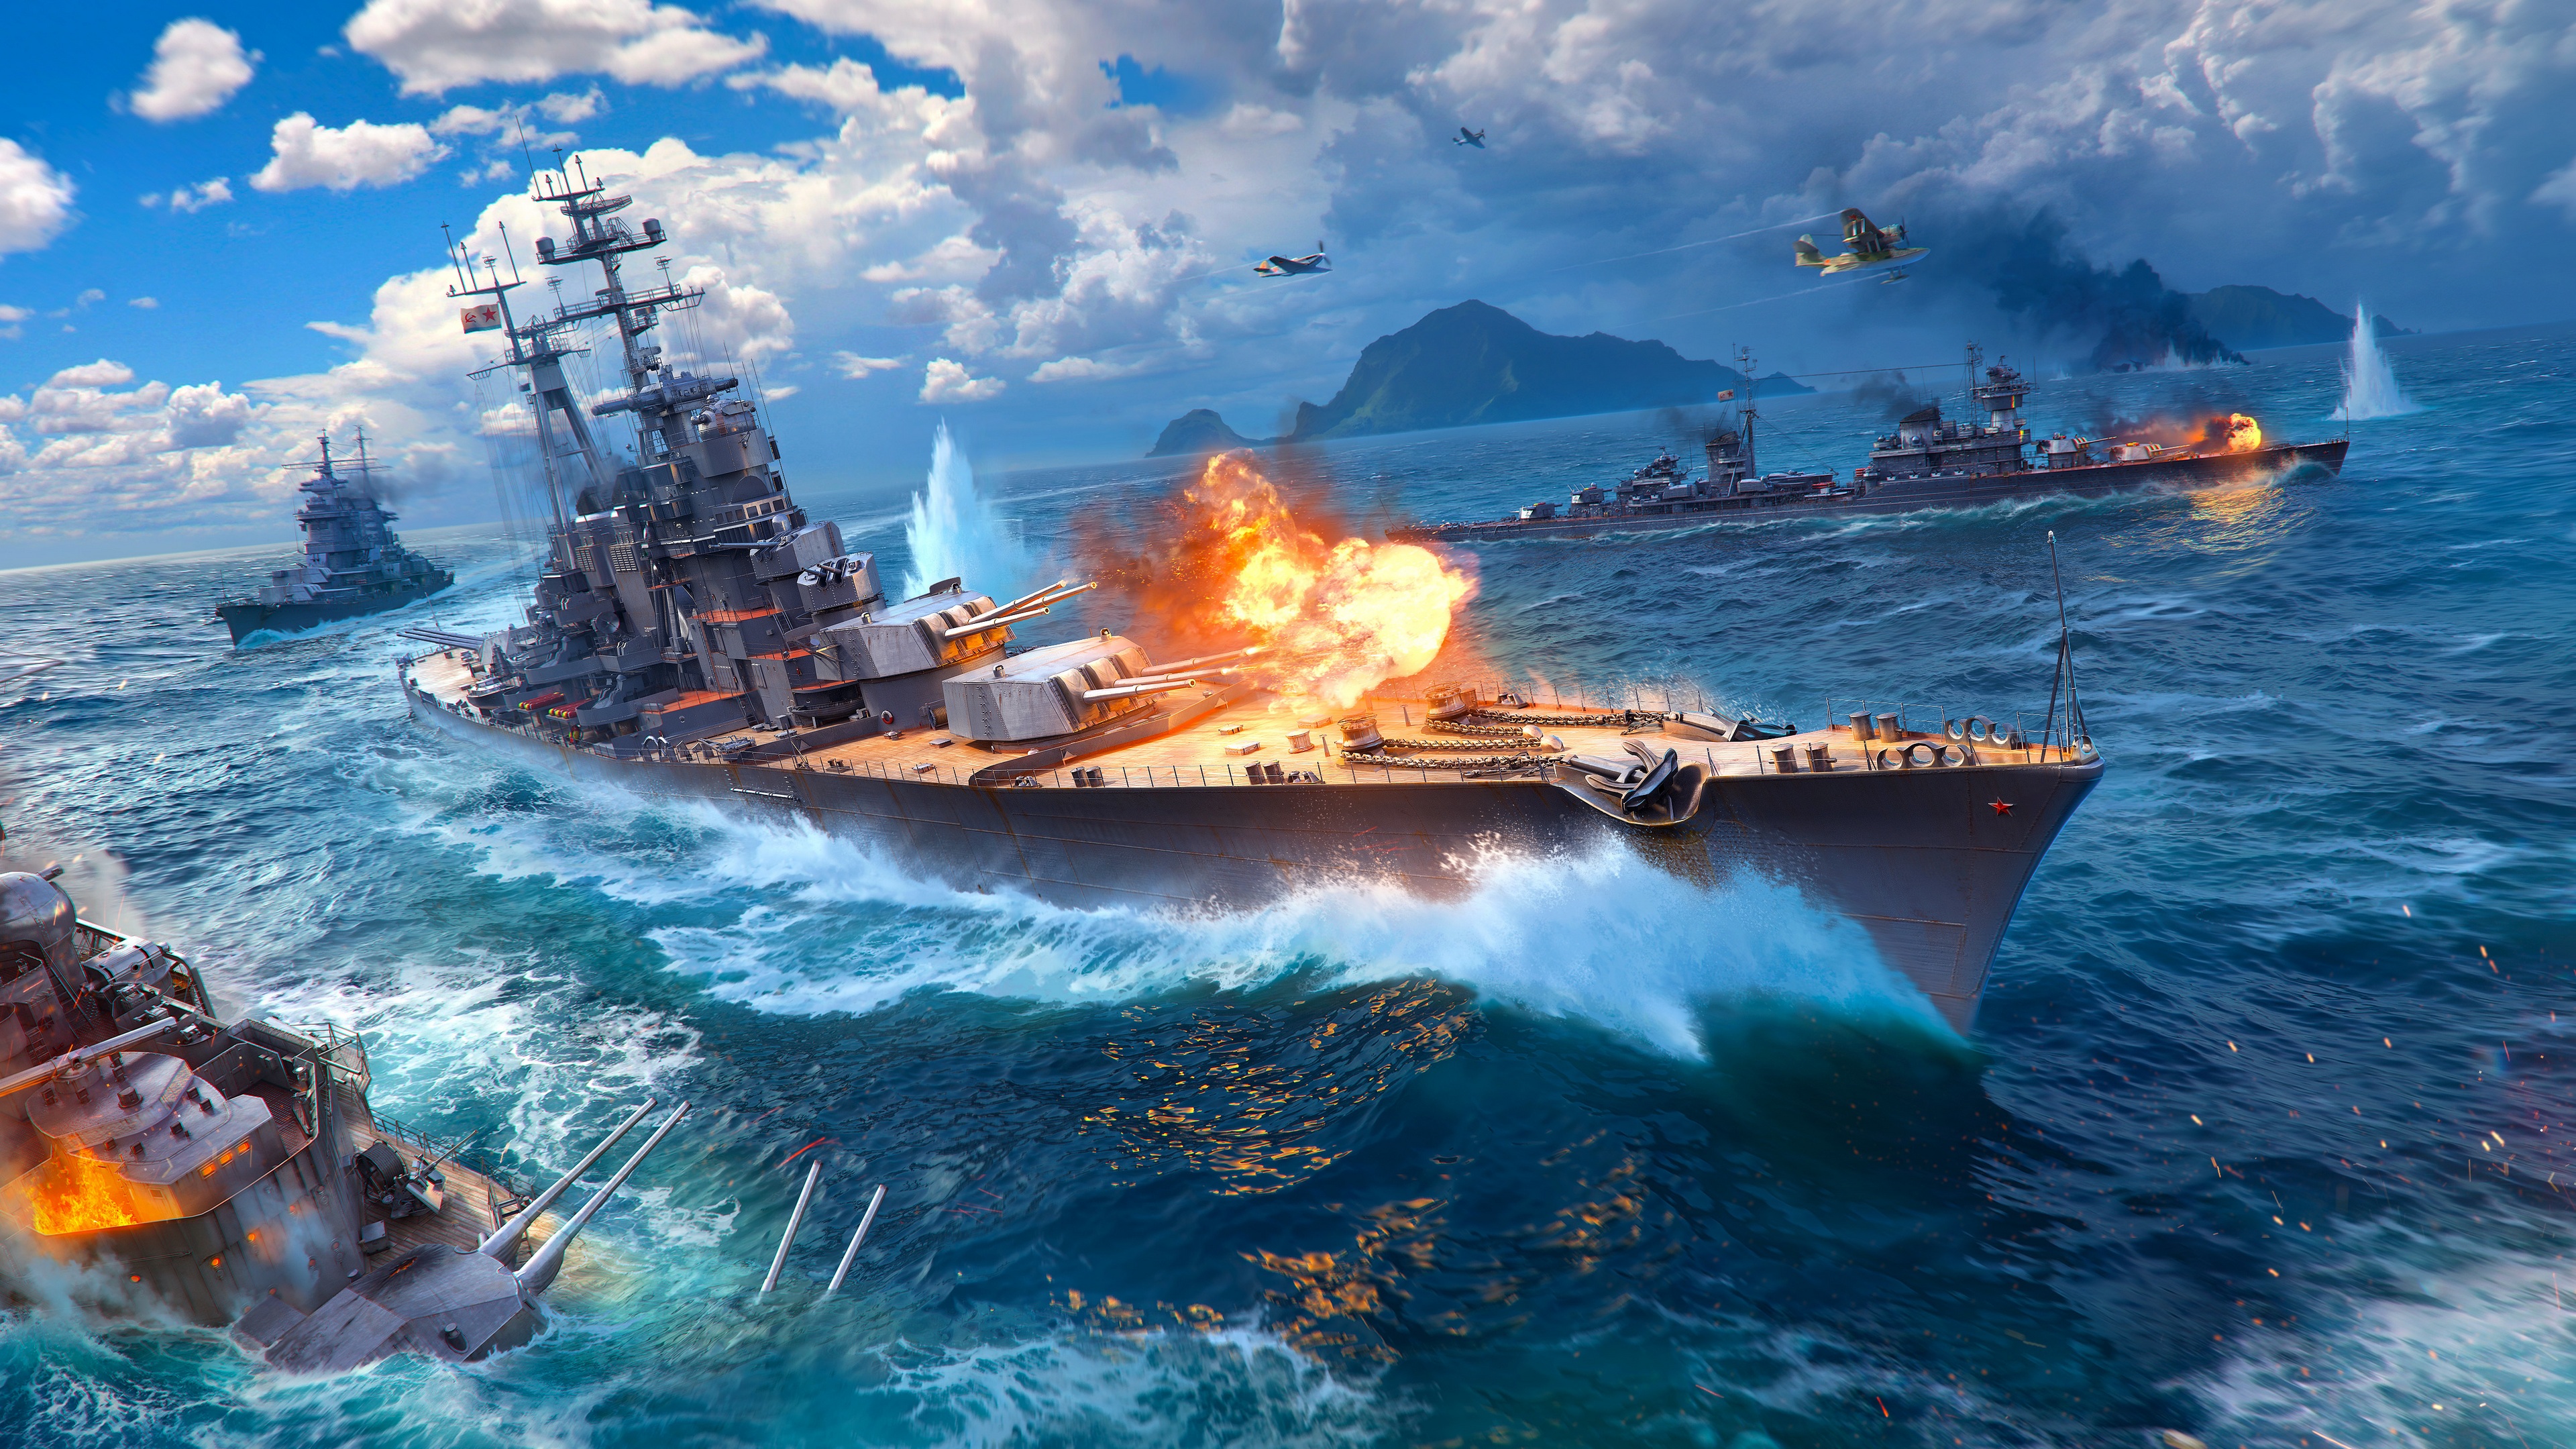 General 3840x2160 World of Warships  sea Battleship video games World War II PC gaming video game art ship ocean battle